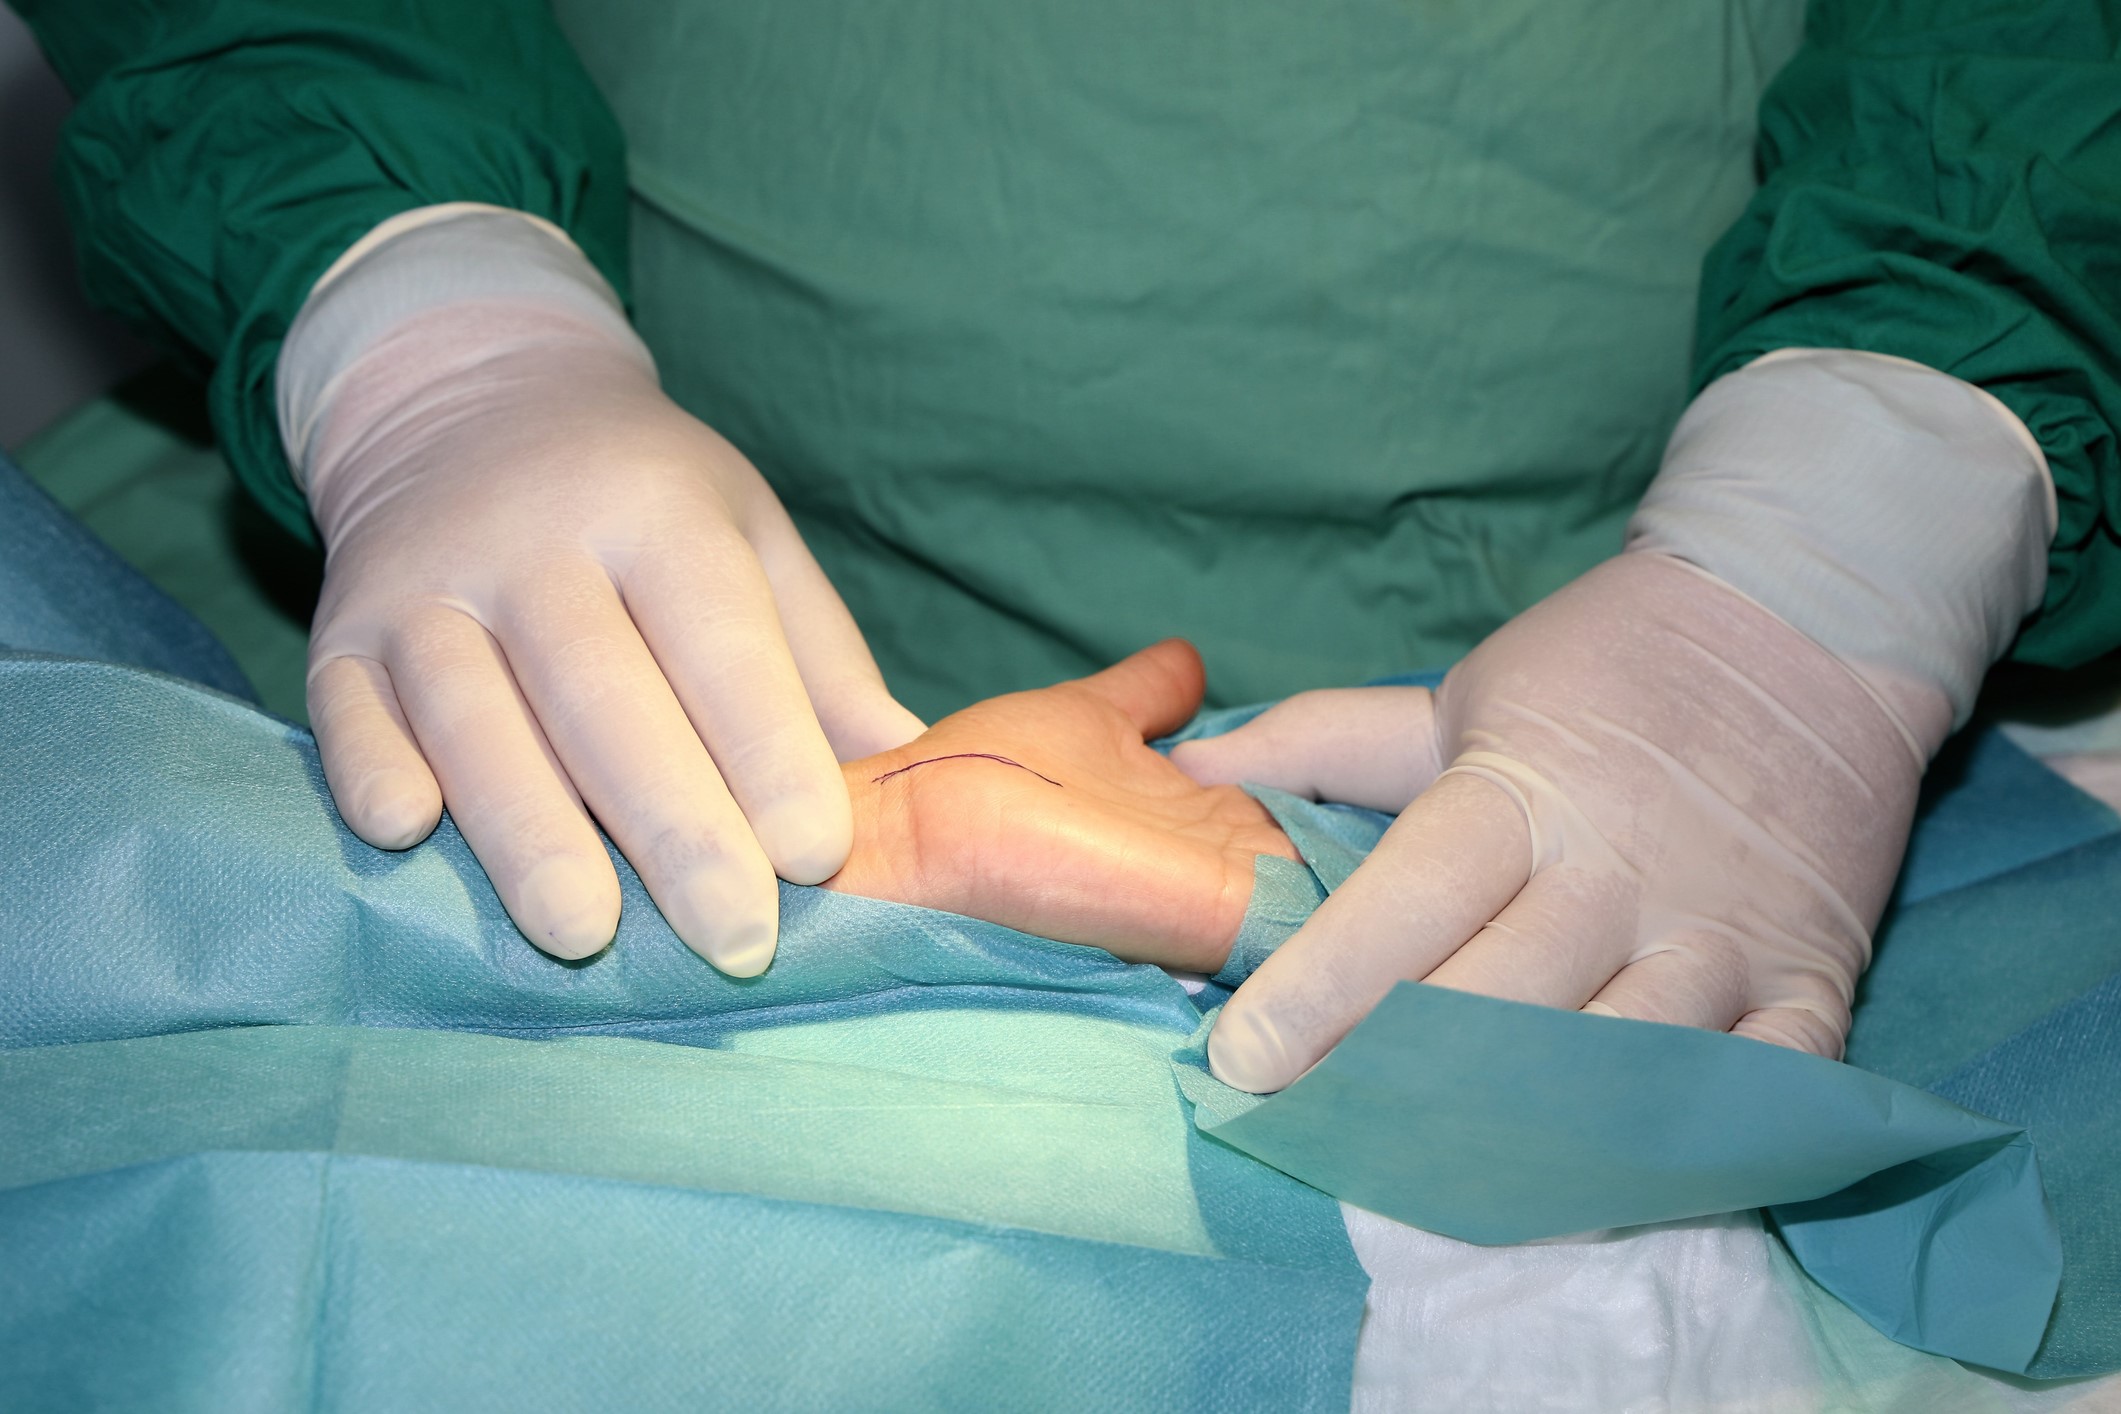 Hand Transplant Surgery